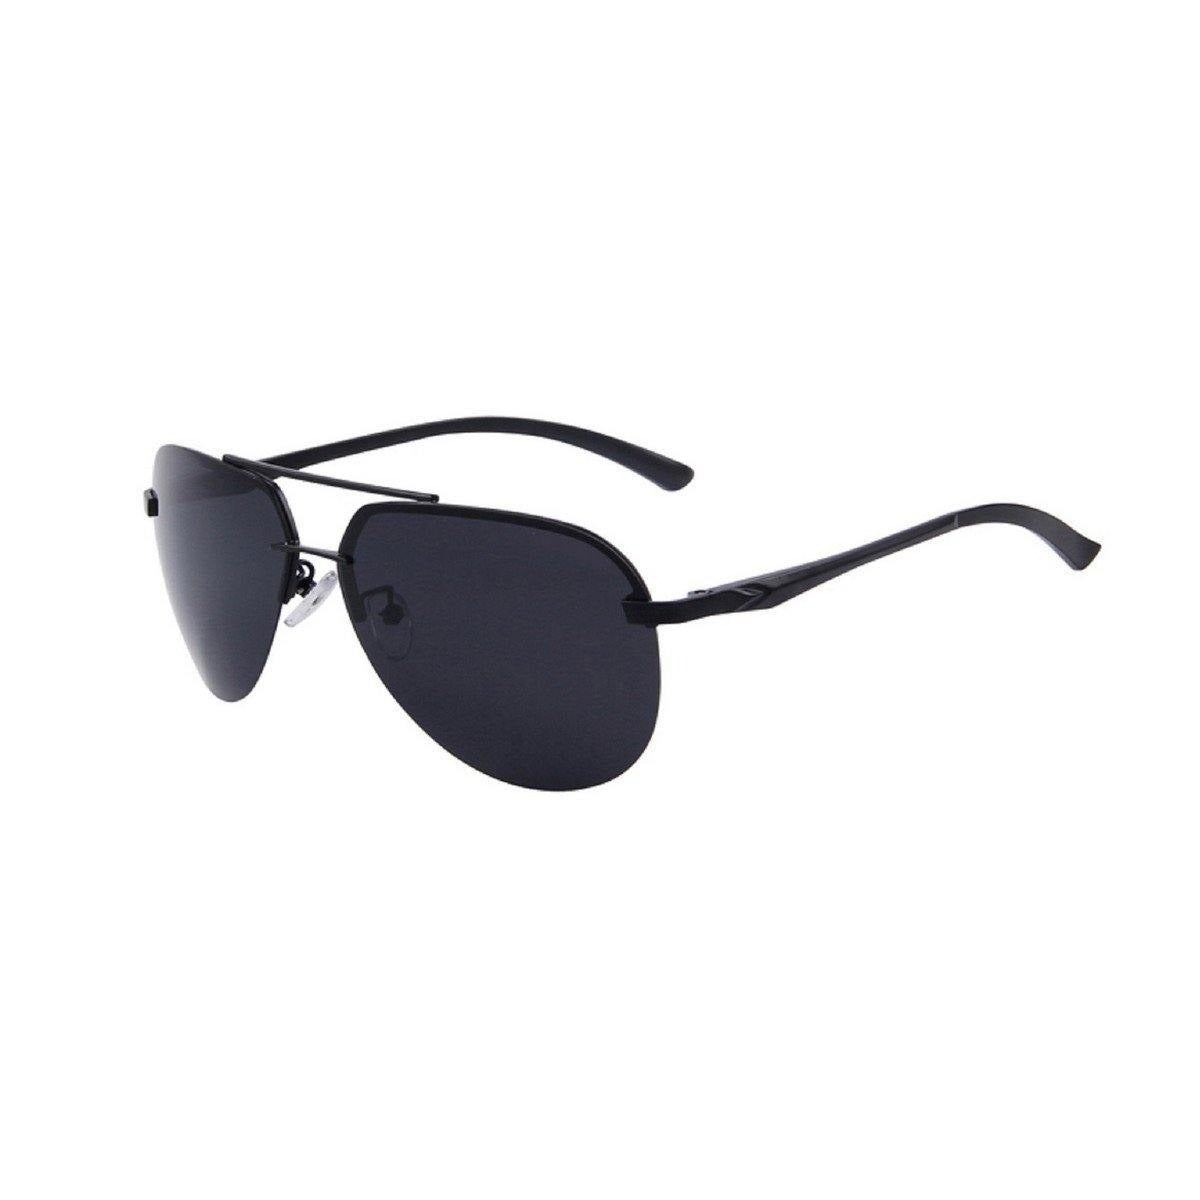 Buy HD Vision Black Polarized Aviator Sunglasses - Glasses India Online in India